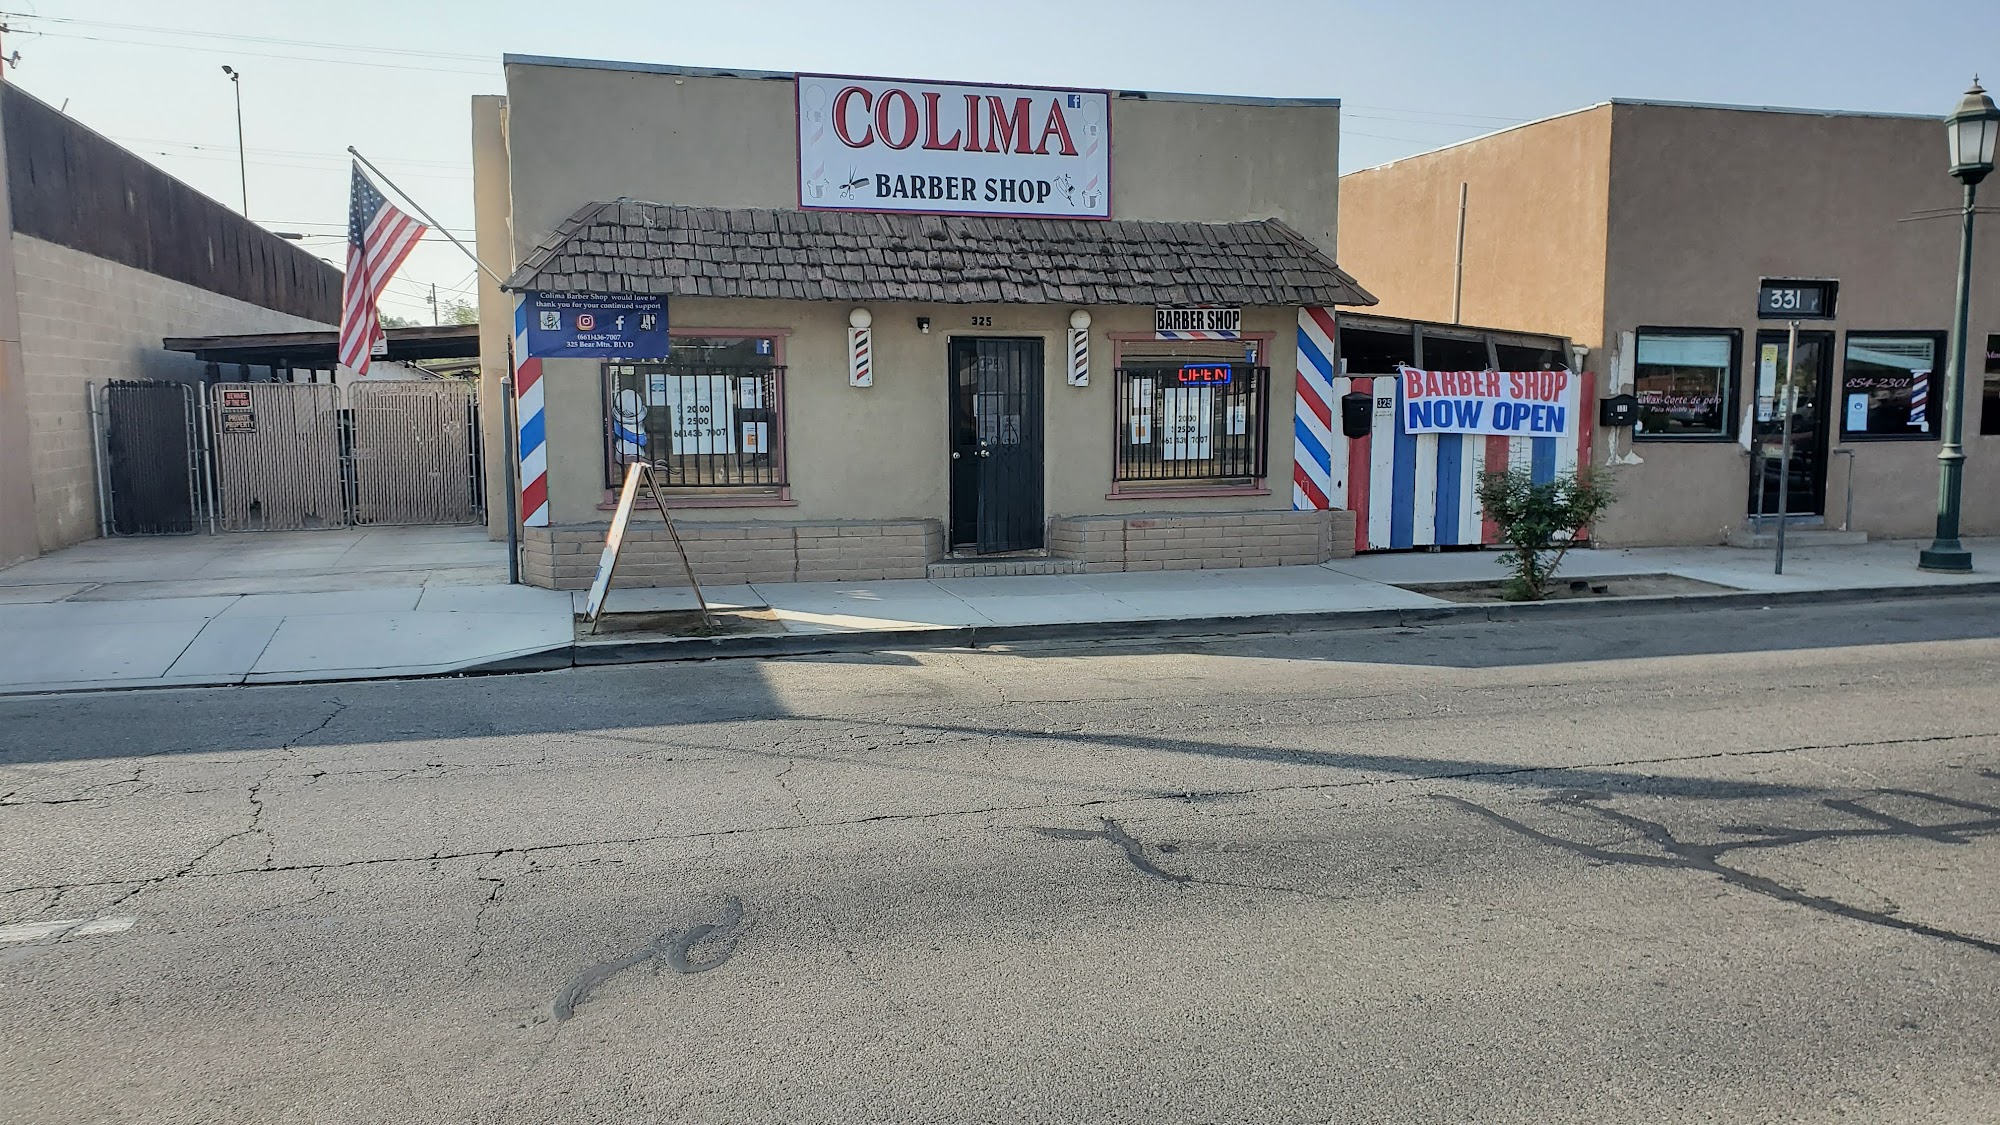 Colima Barber shop 325 Bear Mountain Blvd, Arvin California 93203